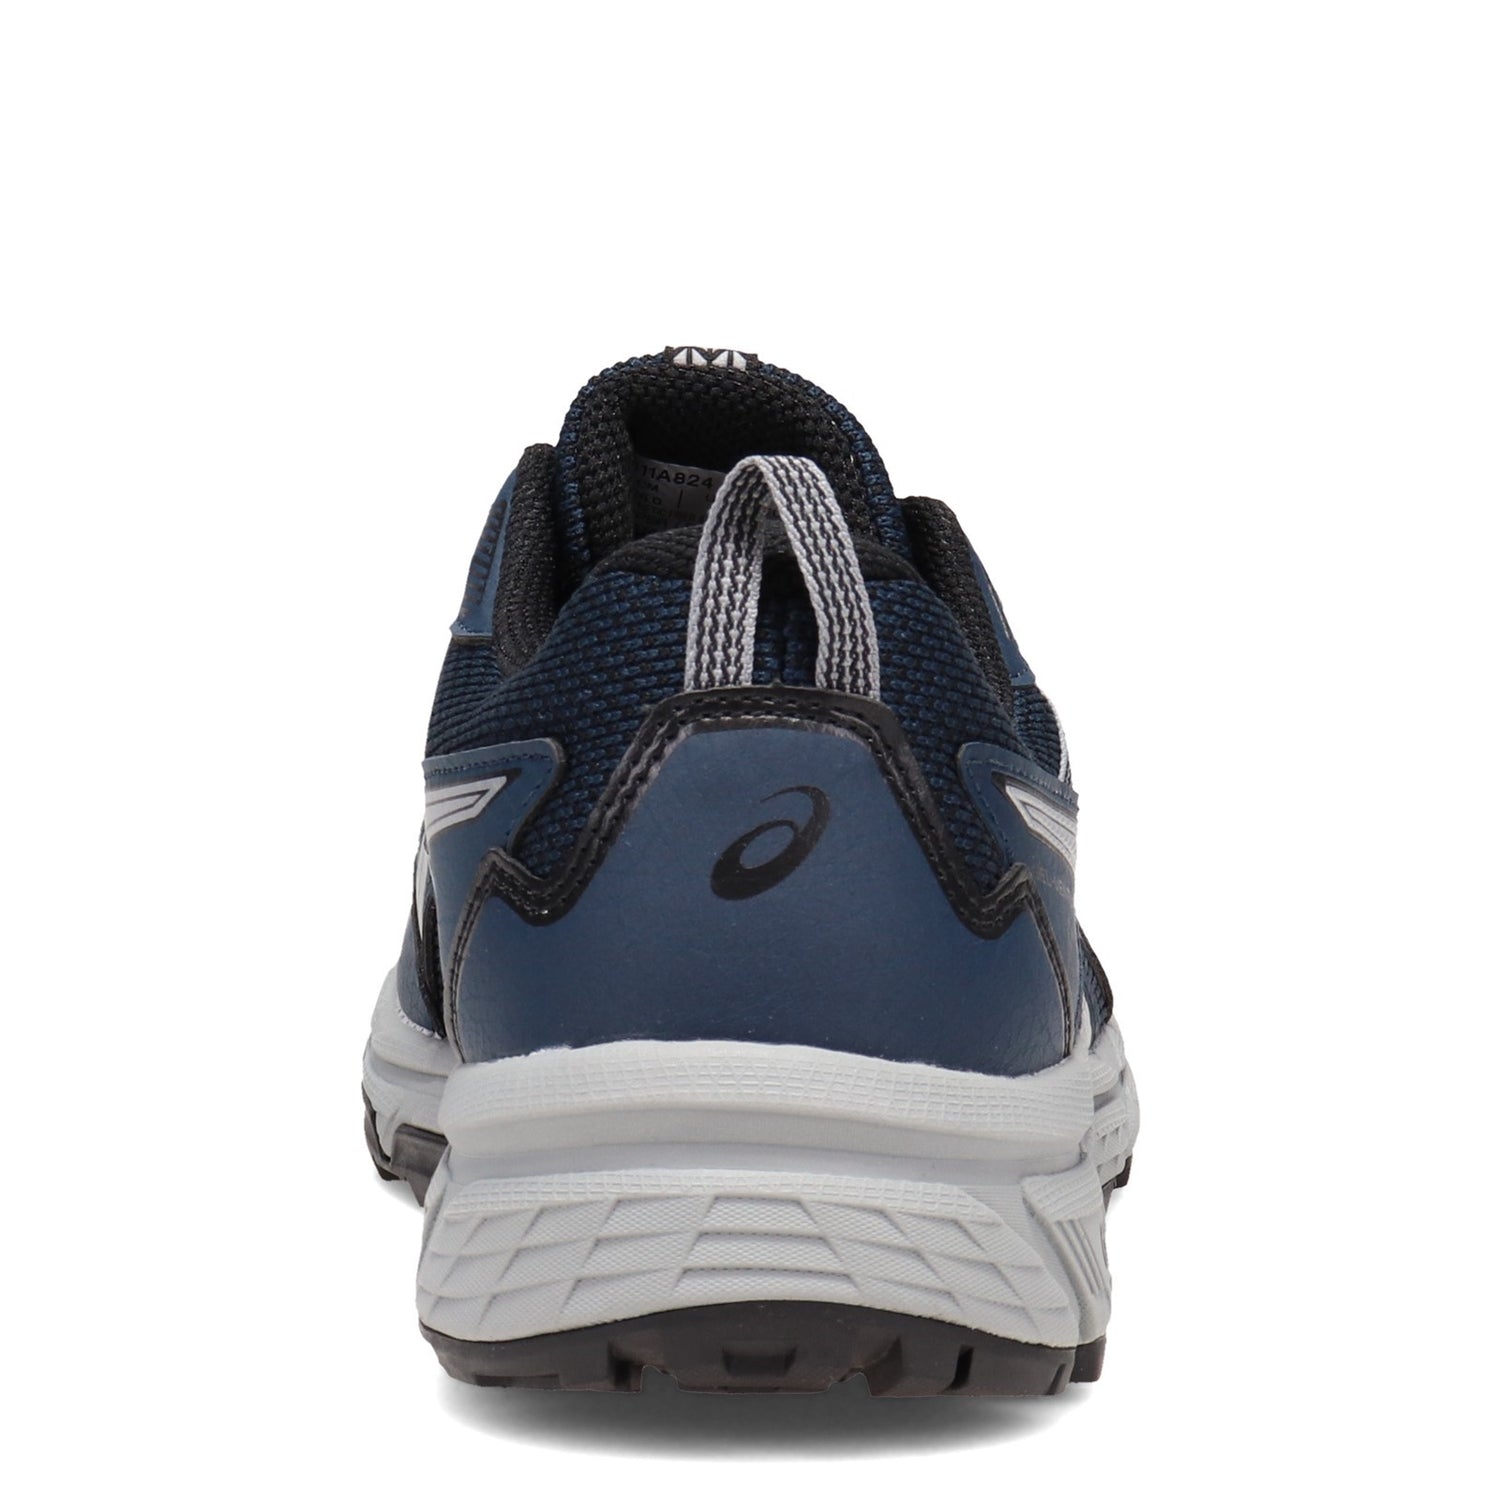 Peltz Shoes  Men's ASICS GEL-Venture 8 Trail Running Shoe - Wide Width BLUE SILVER 1011A826.404